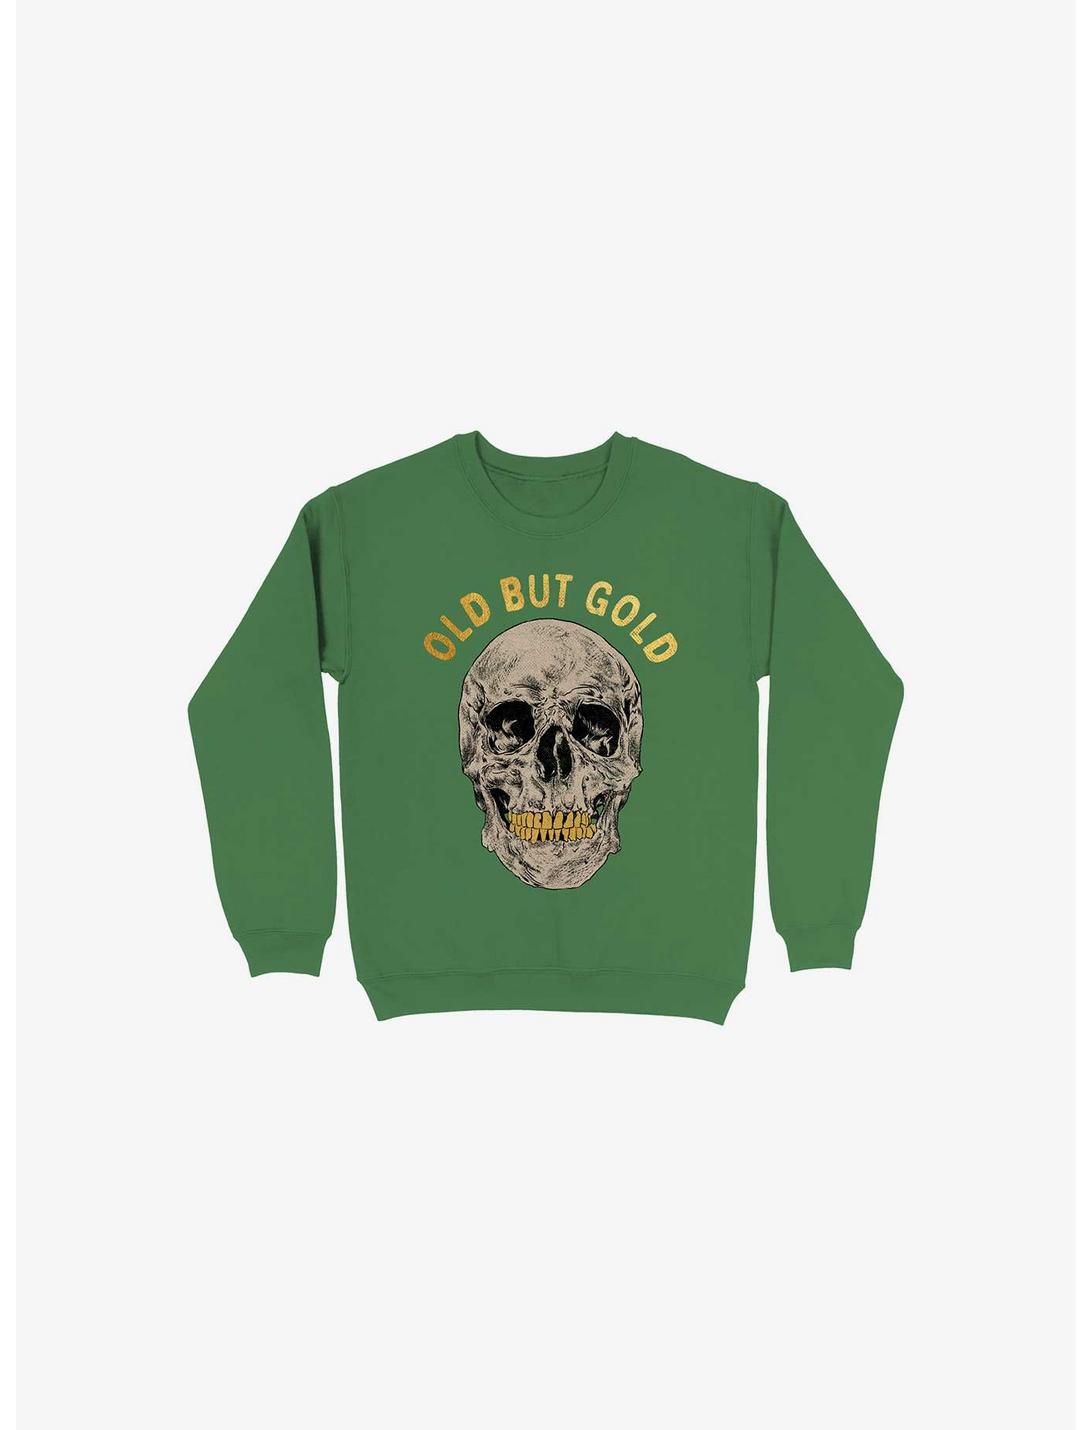 Old But Gold Skull Kelly Green Sweatshirt, KELLY GREEN, hi-res